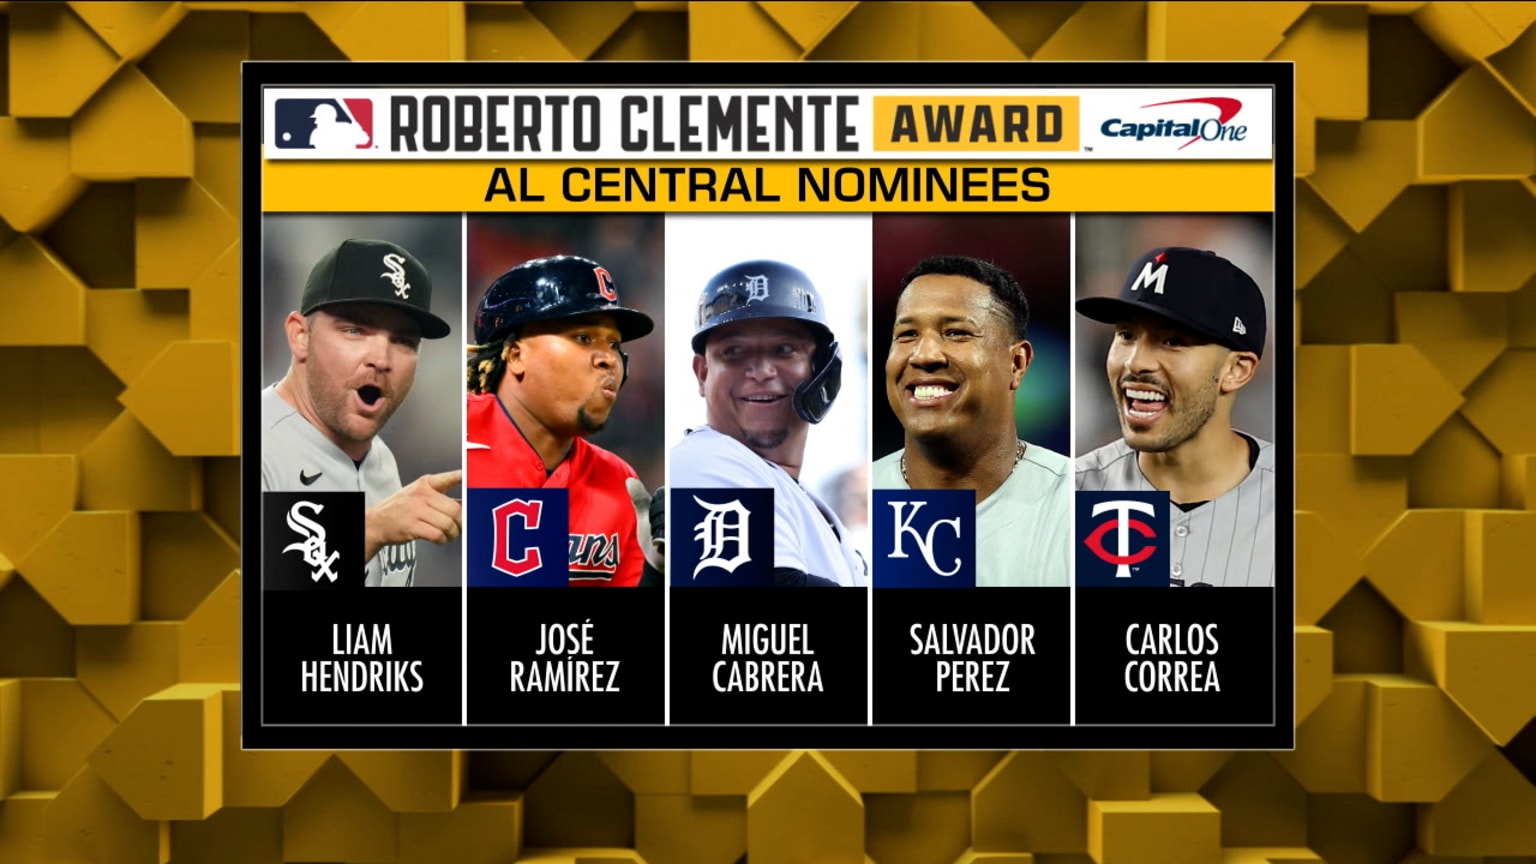 Roberto Clemente Award: Jose Ramirez nominated by Guardians